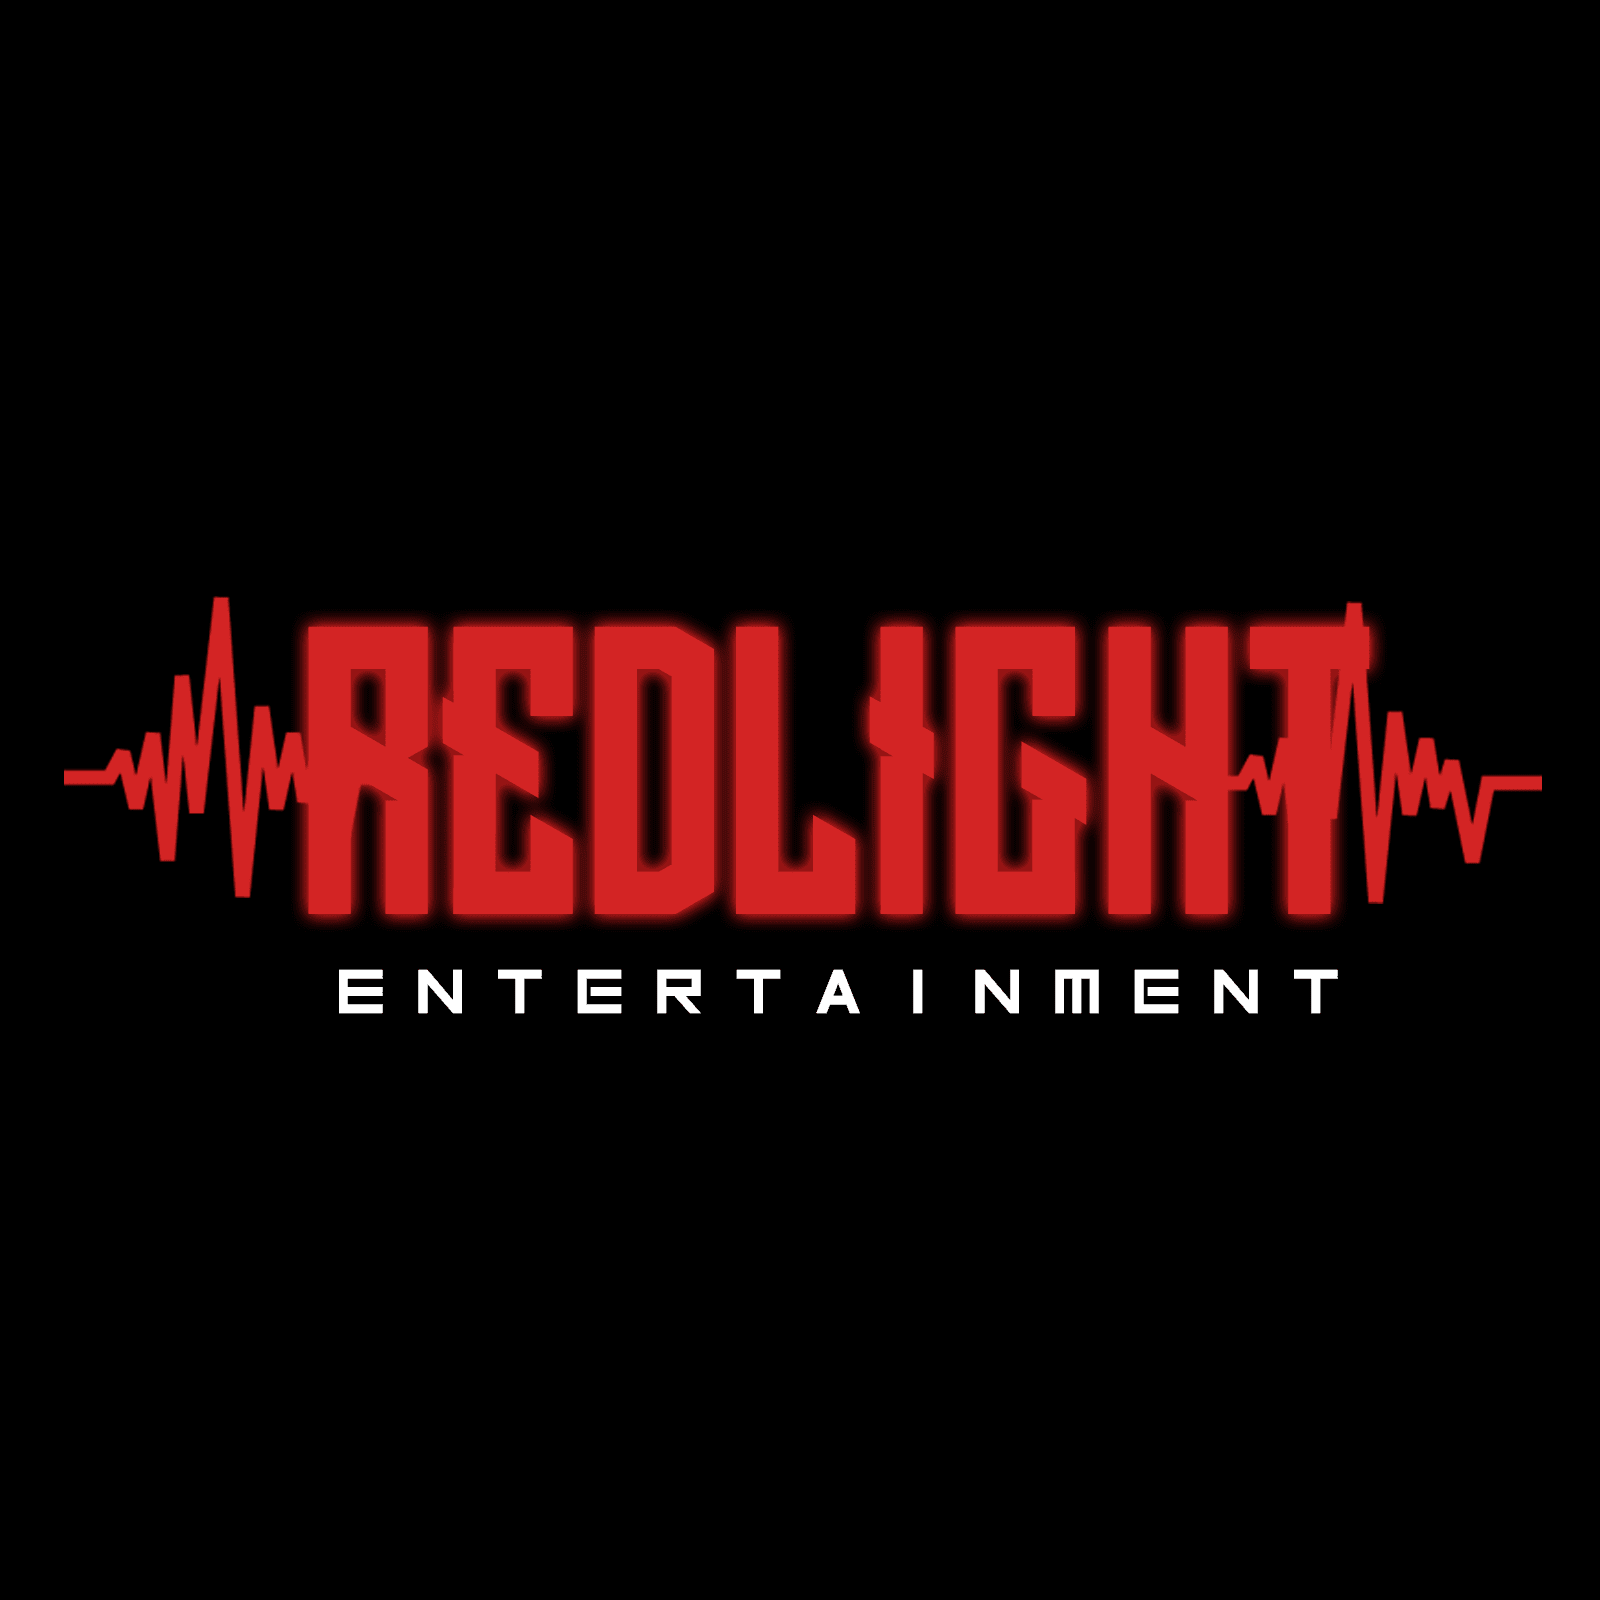 Red Light Entertainment